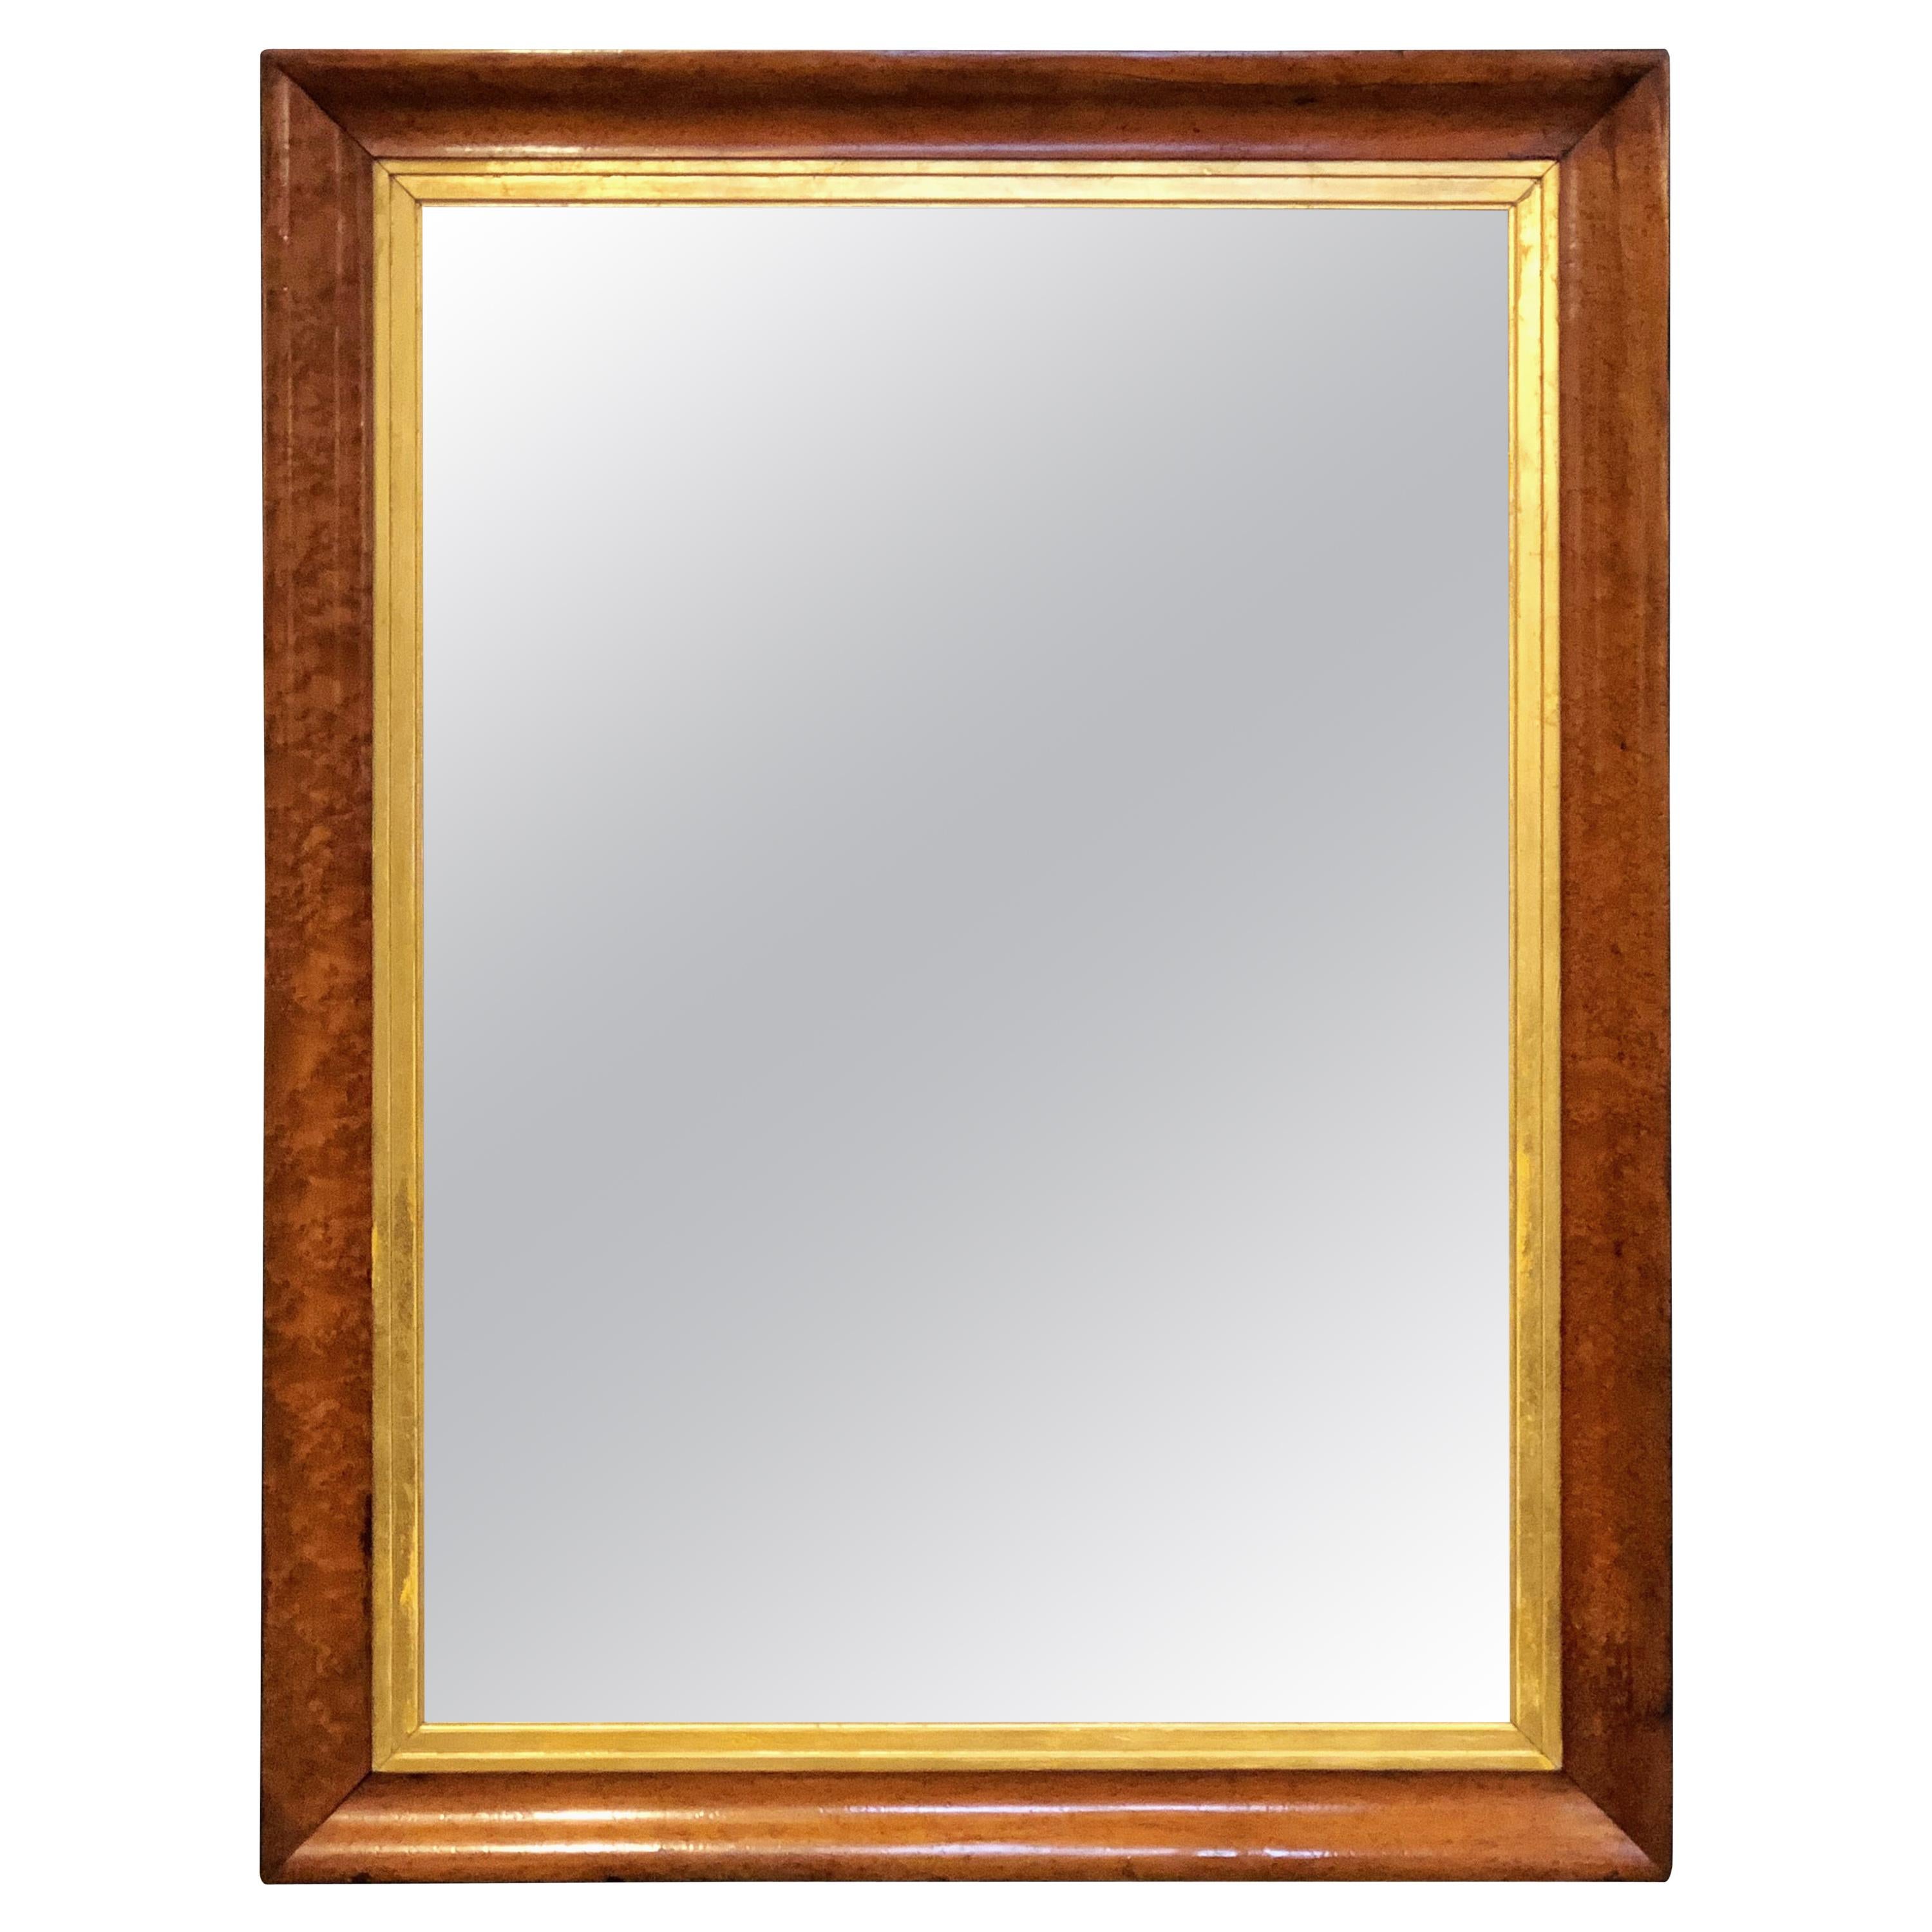 English Rectangular Maple and Gilt-wood Framed Mirror (H 41 3/4 x W 31 7/8)